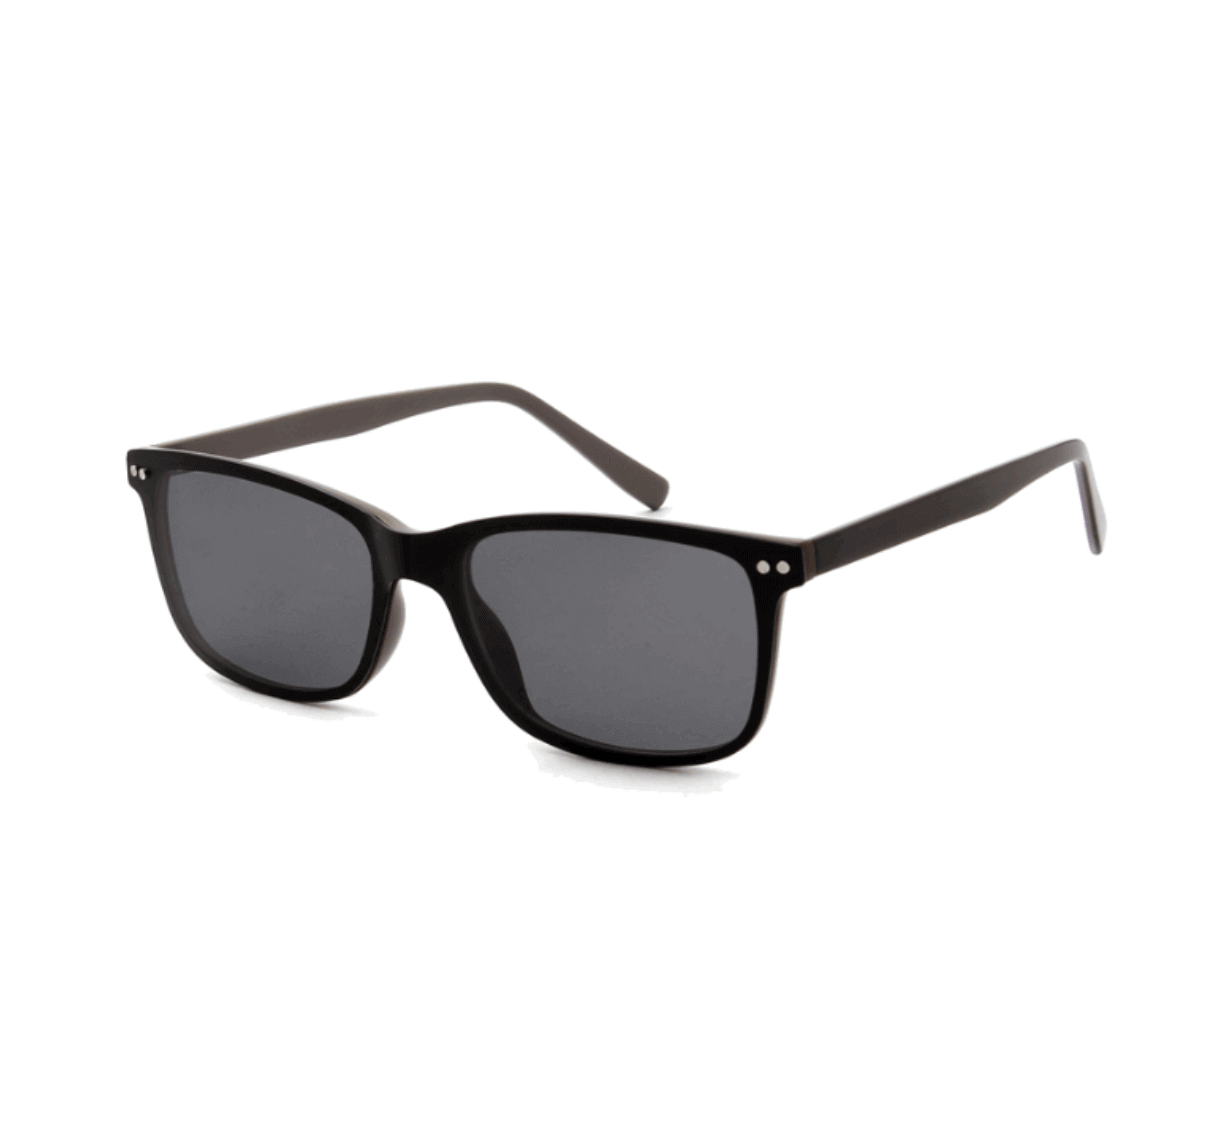 Wholesale Square Sunglasses from China - China Sunglasses Wholesale - Wholesale Sunglasses Supplier